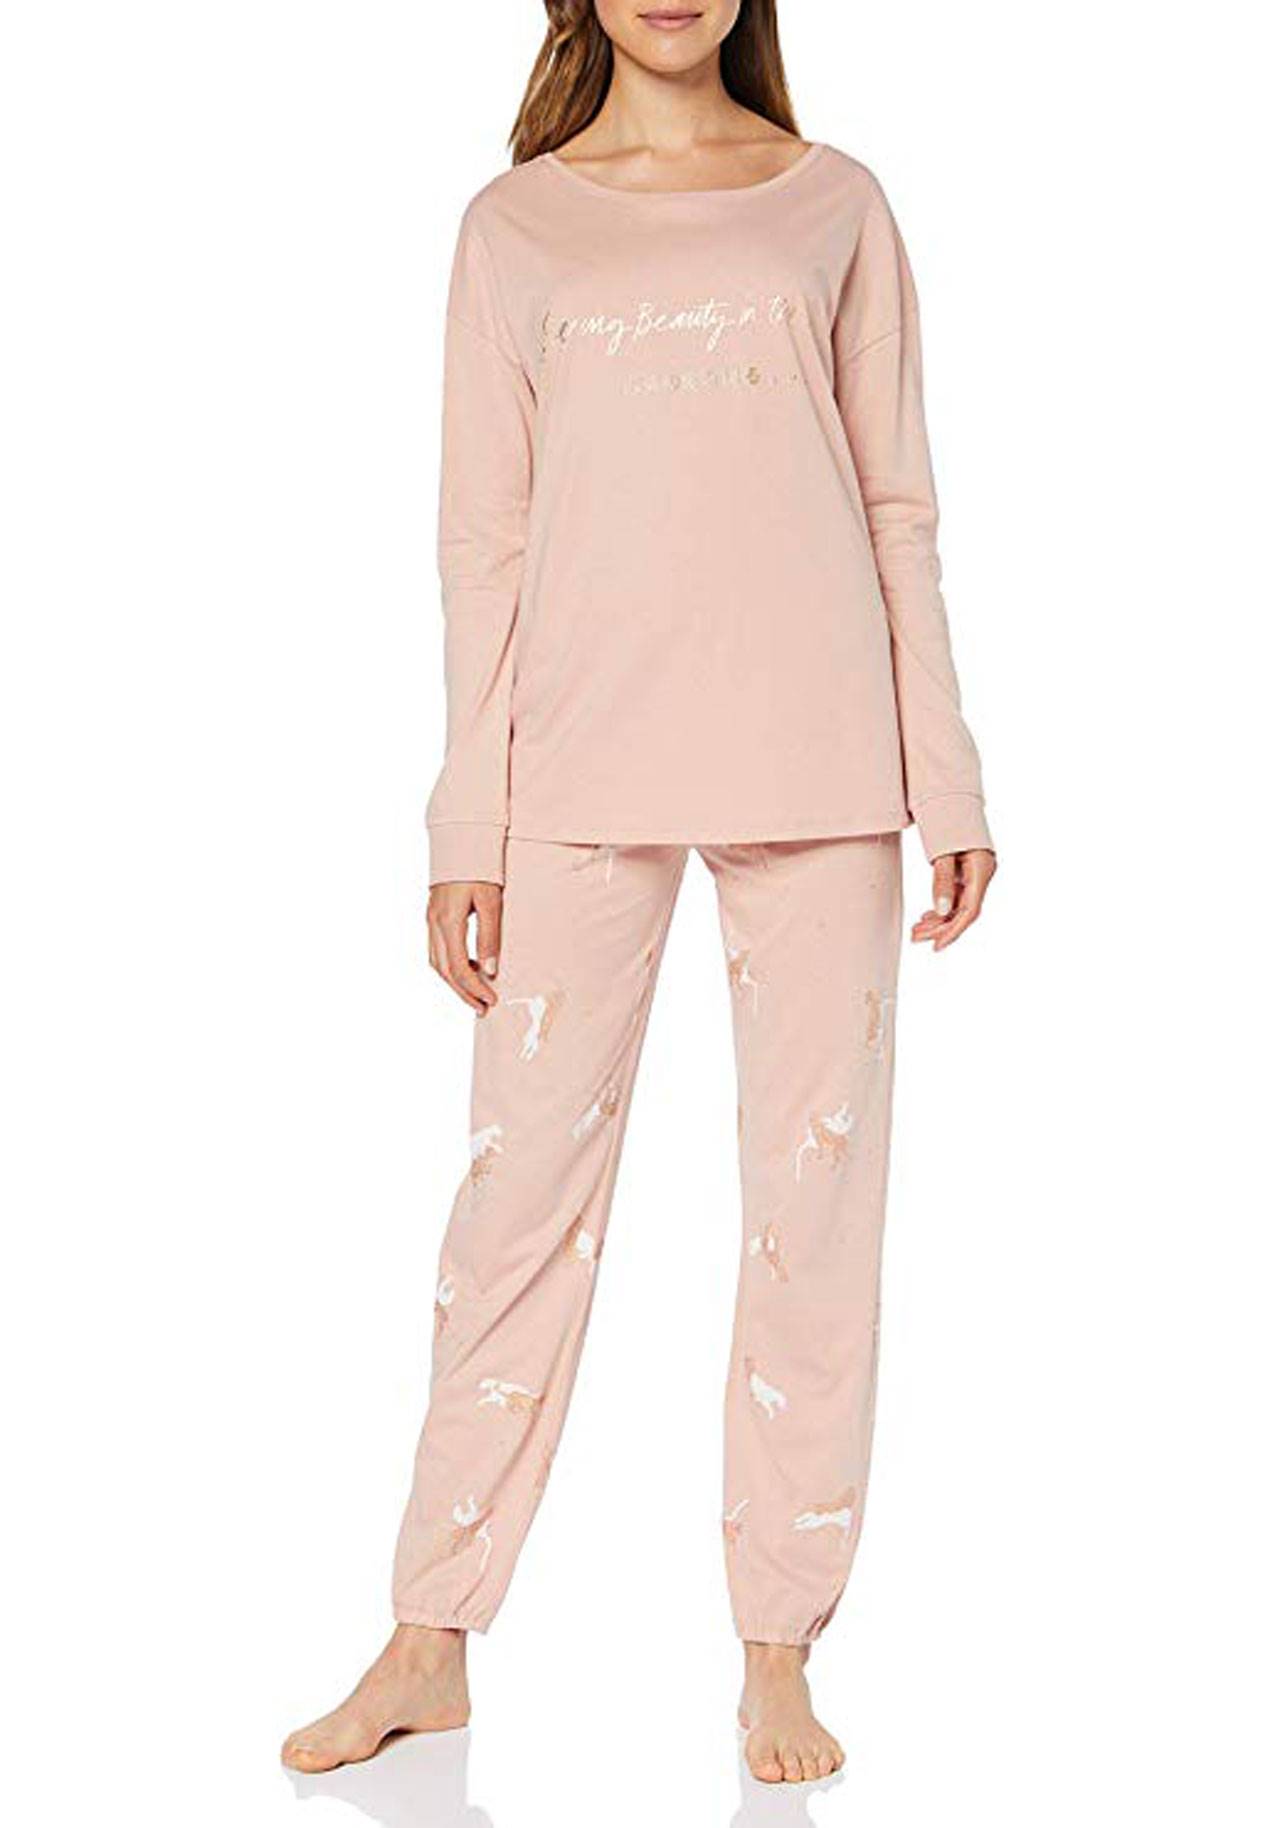 pijama-calentito-rosa-pastel